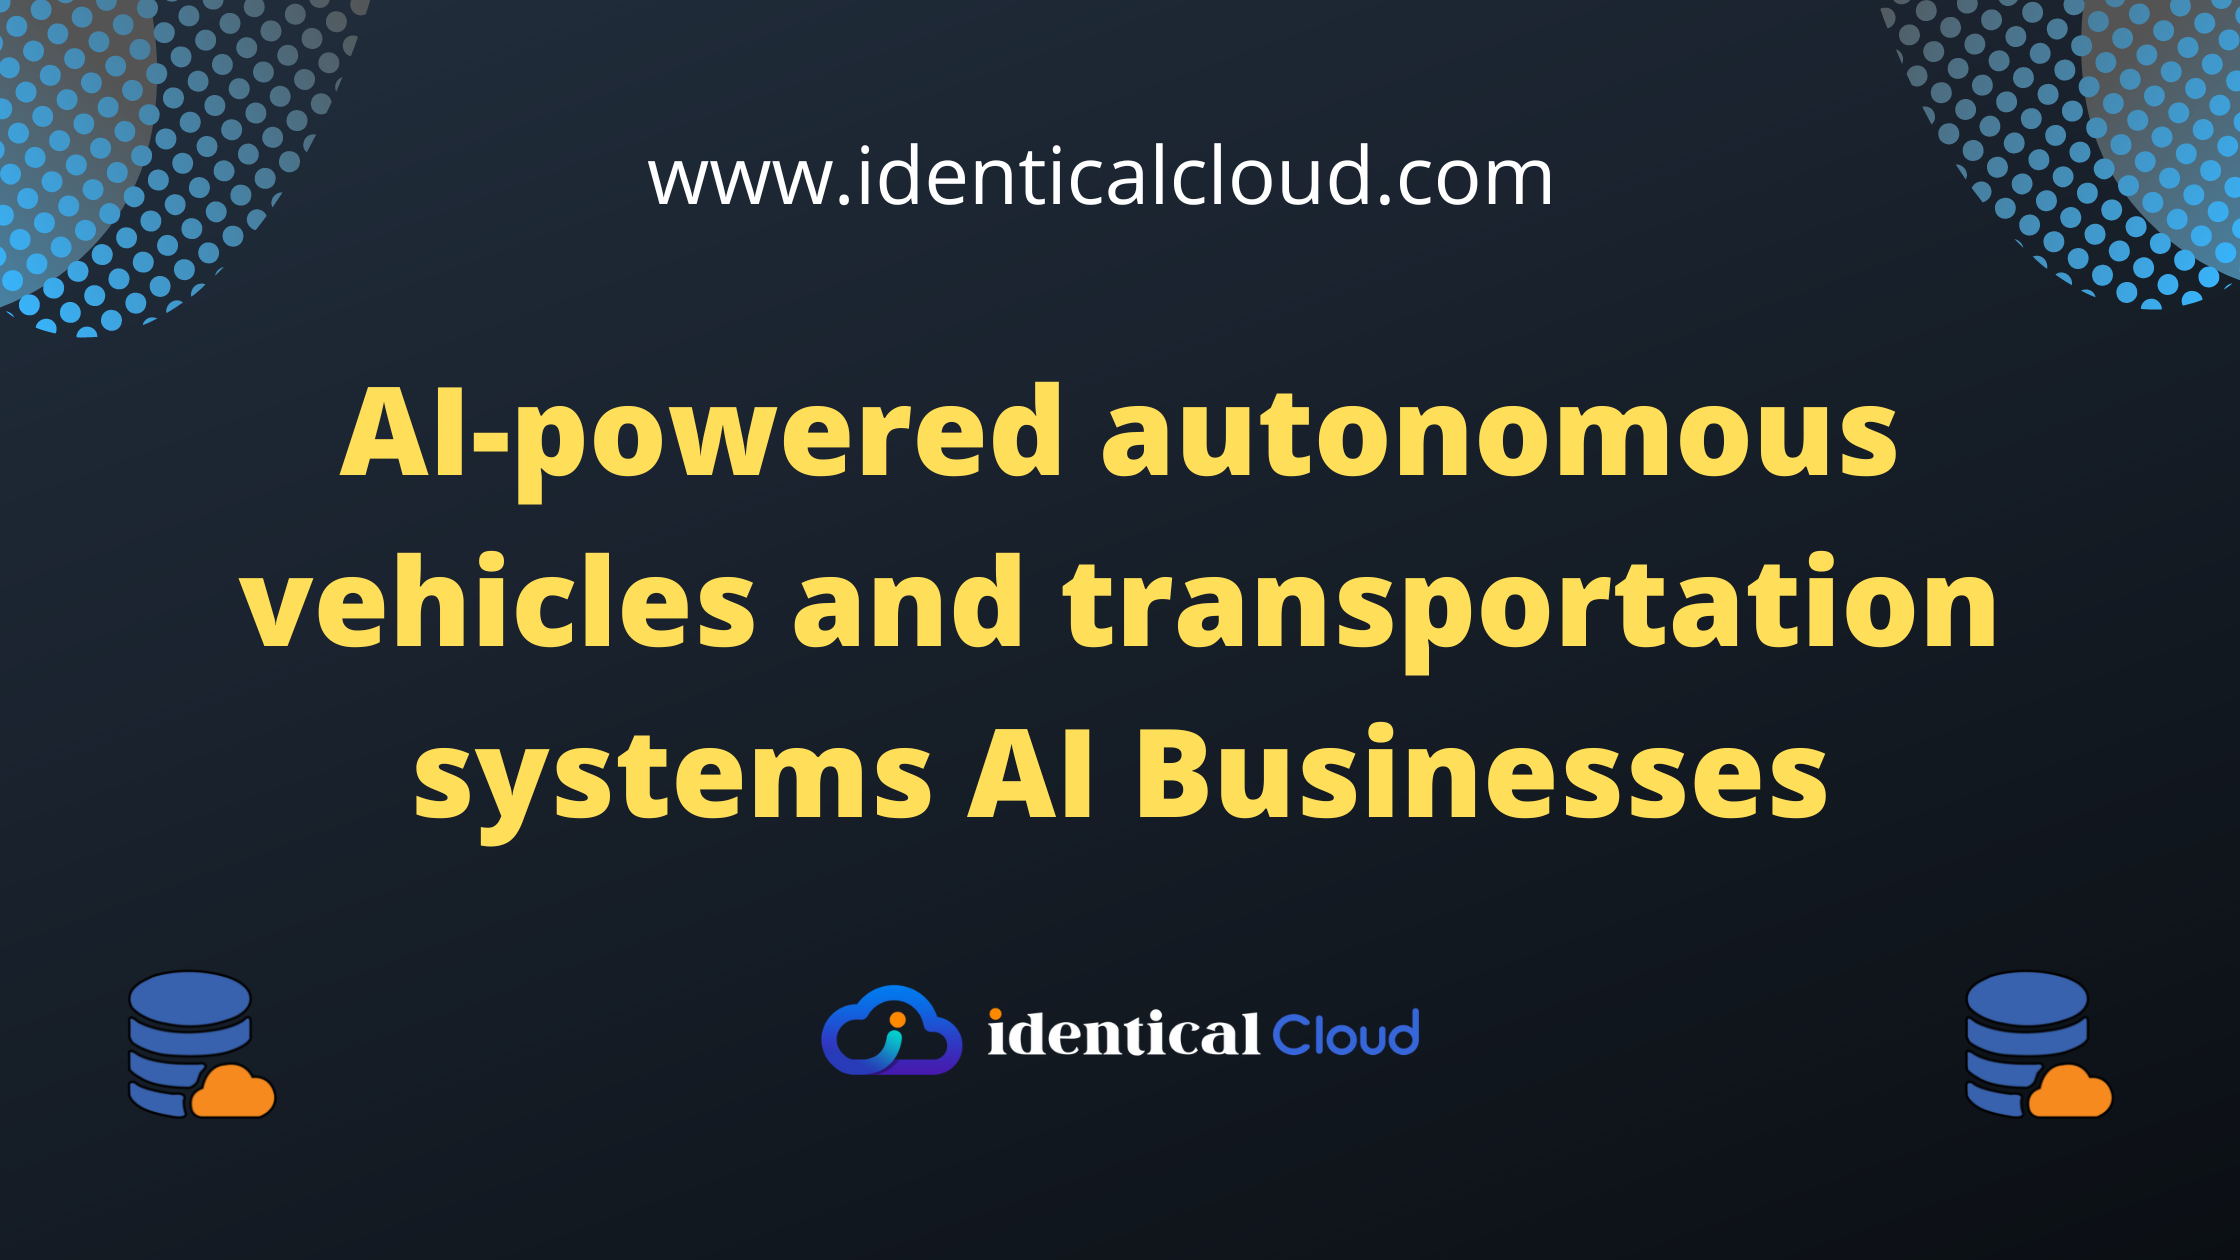 AI-powered autonomous vehicles and transportation systems AI Businesses - identicalcloud.com